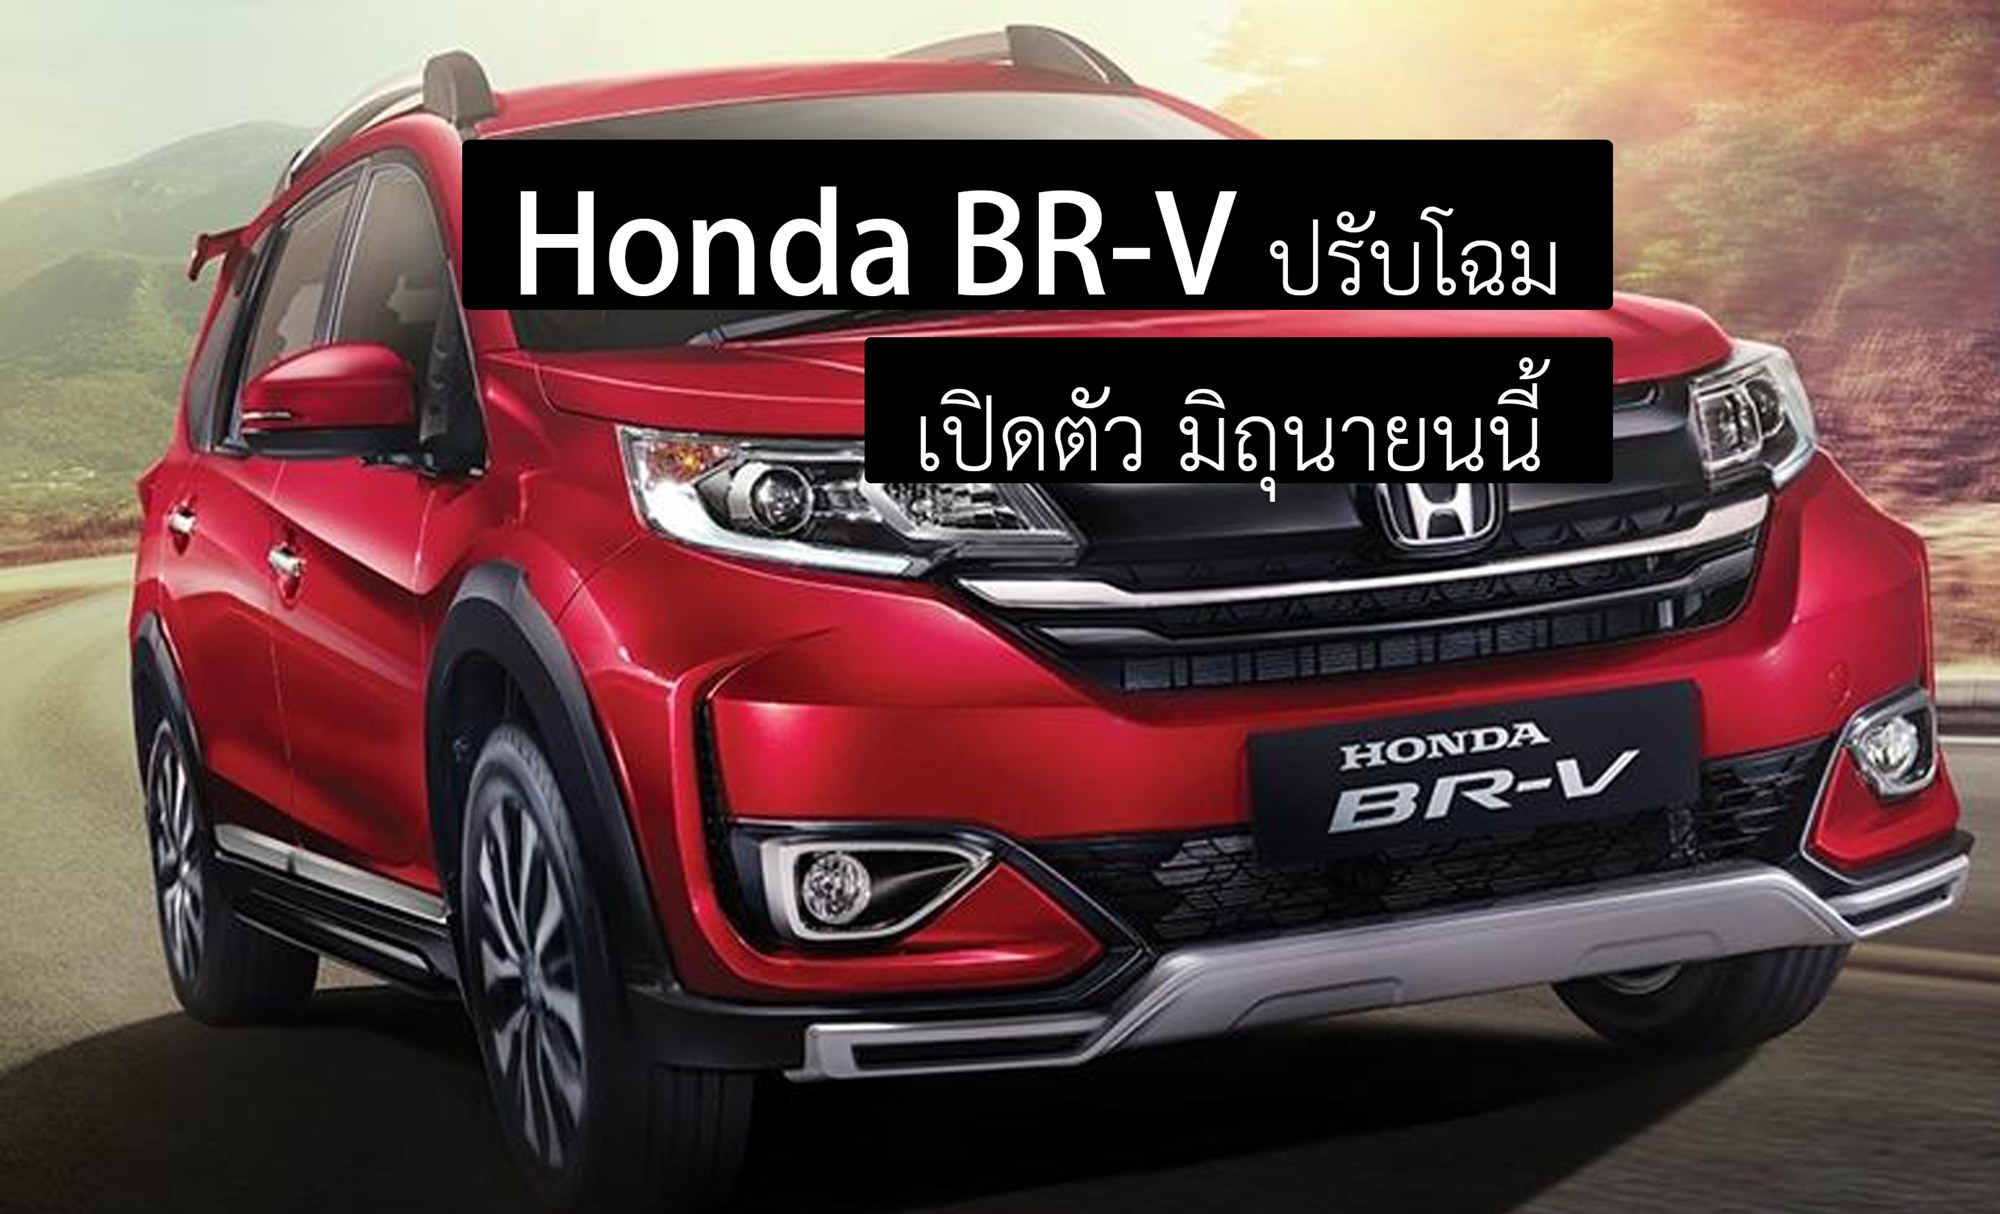 NEW Honda BR-V เจนใหม่ เตรียมเปิดตัวในไทย มิถุนายนนี้